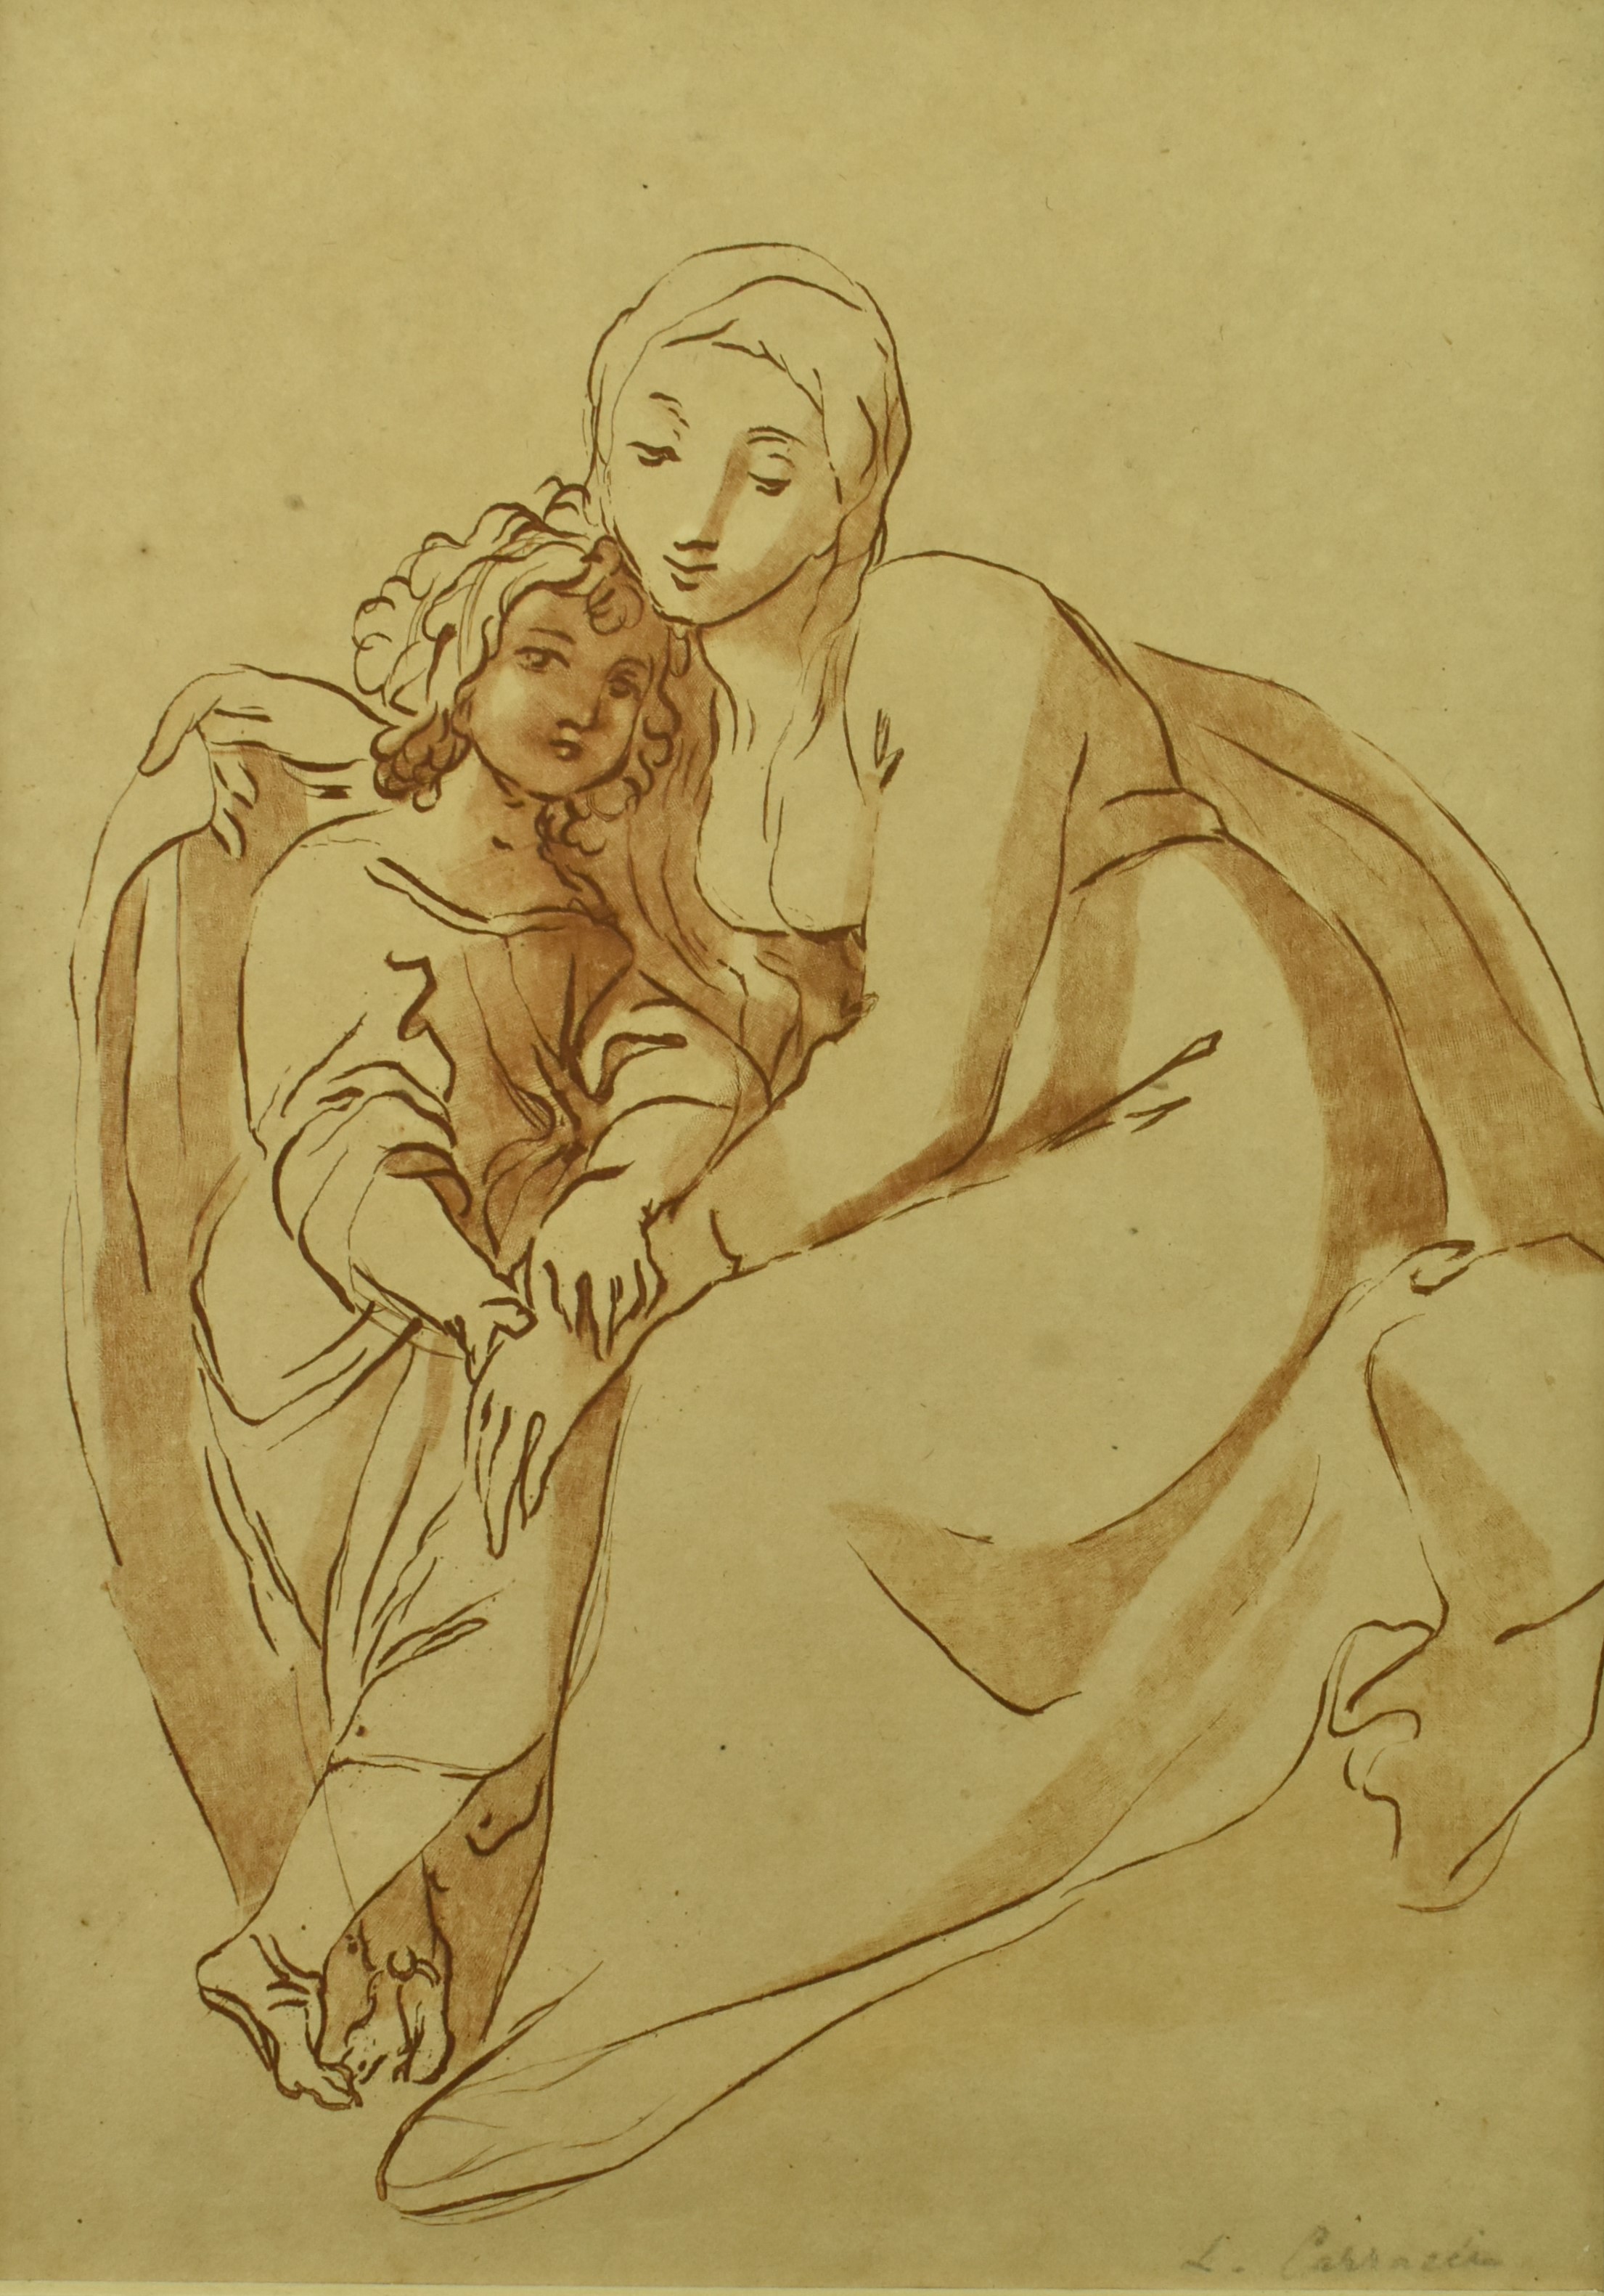 ATTR. LUDOVICO CARRACCI (1555-1619) - STUDY OF MADONNA WITH CHILD